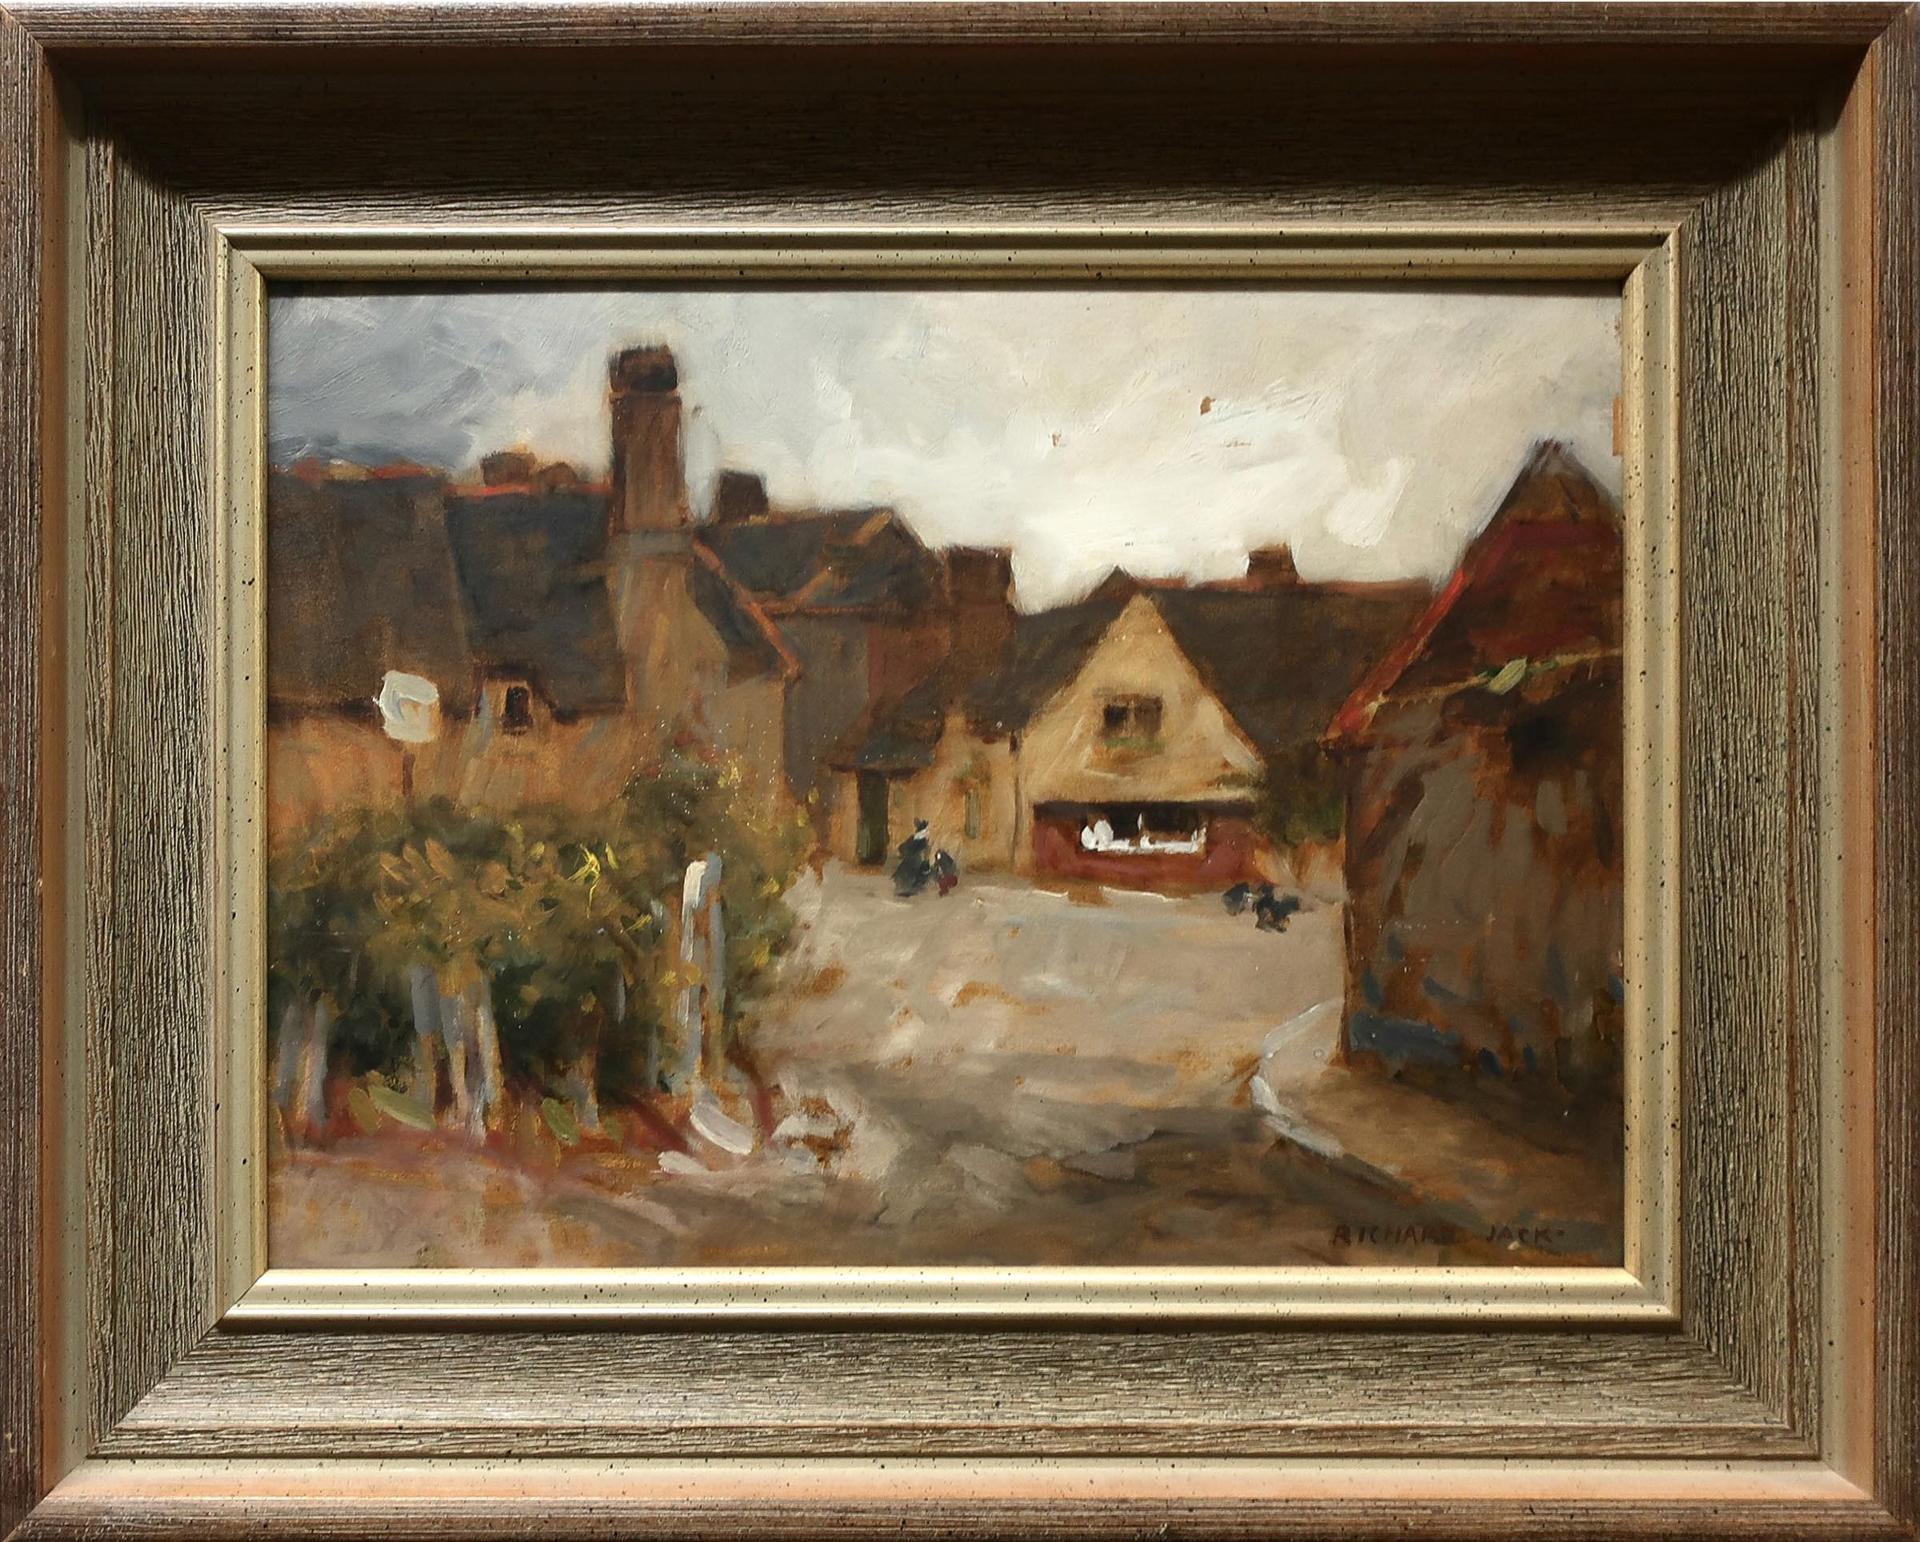 Richard Jack (1866-1952) - Untitled (Village Study)